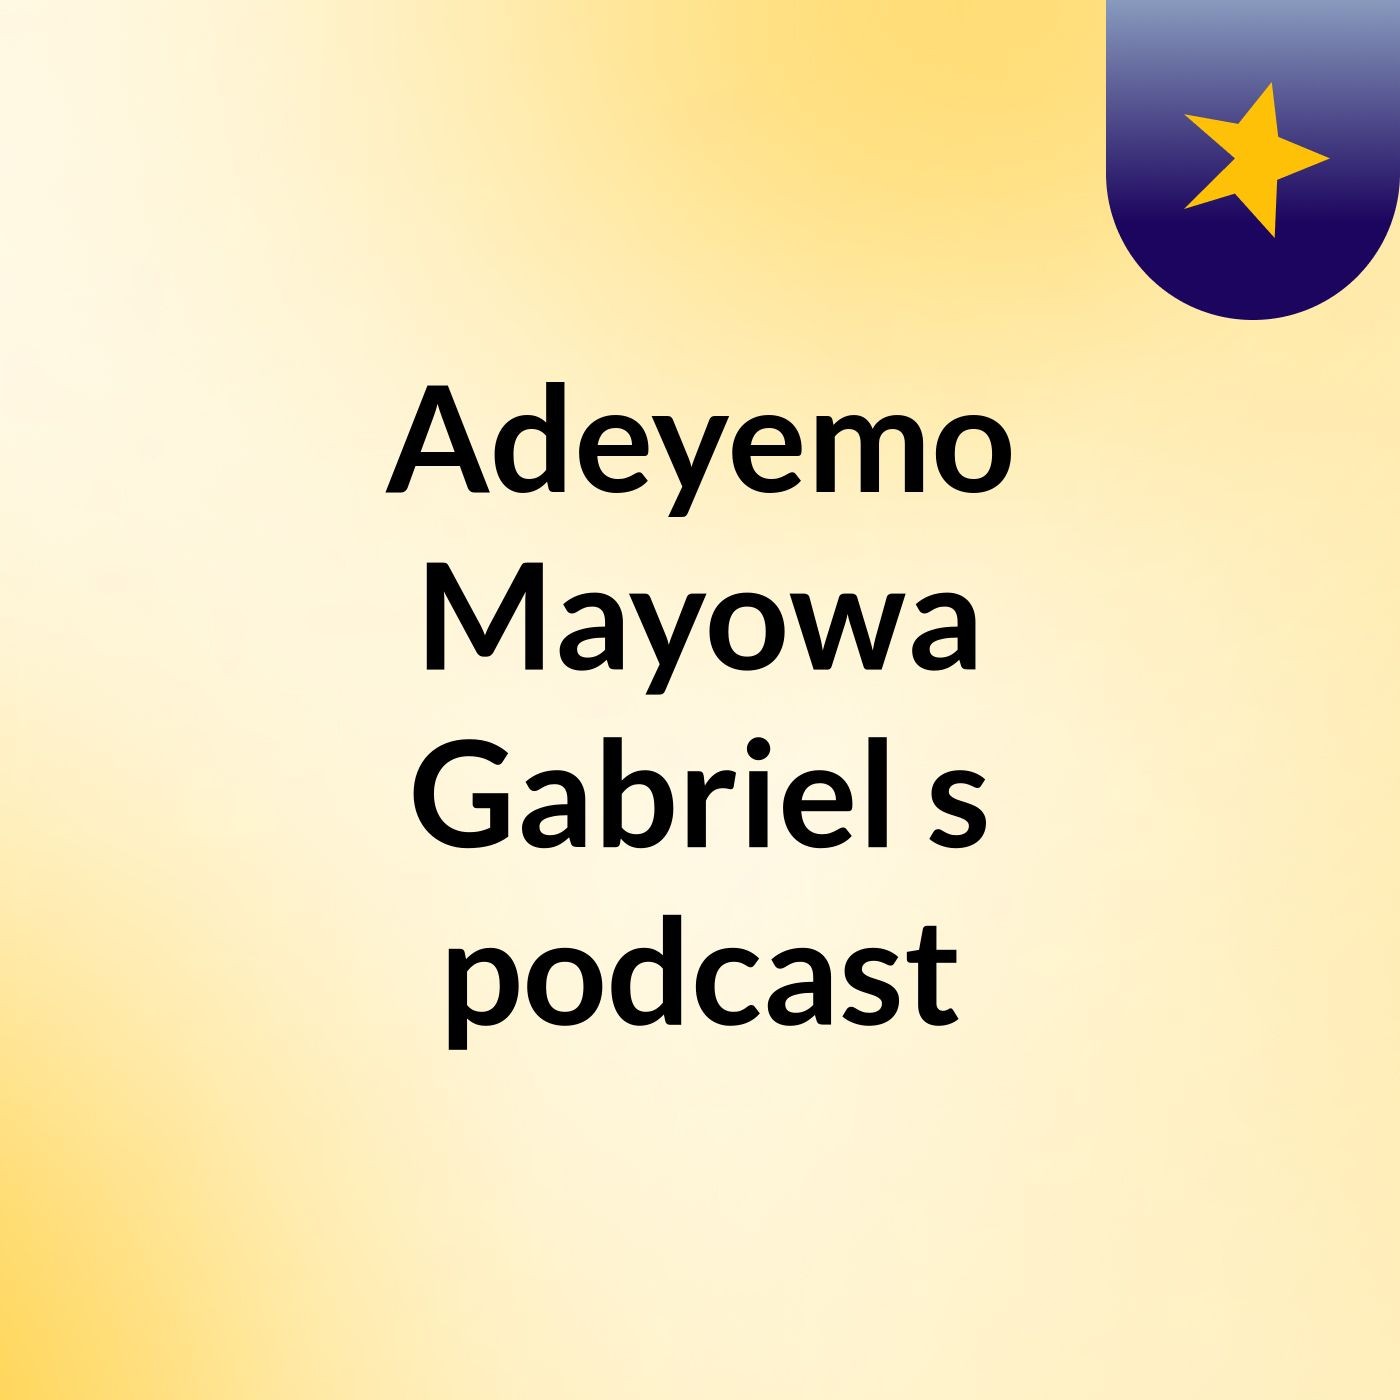 Episode 6 - Adeyemo Mayowa Gabriel's podcast